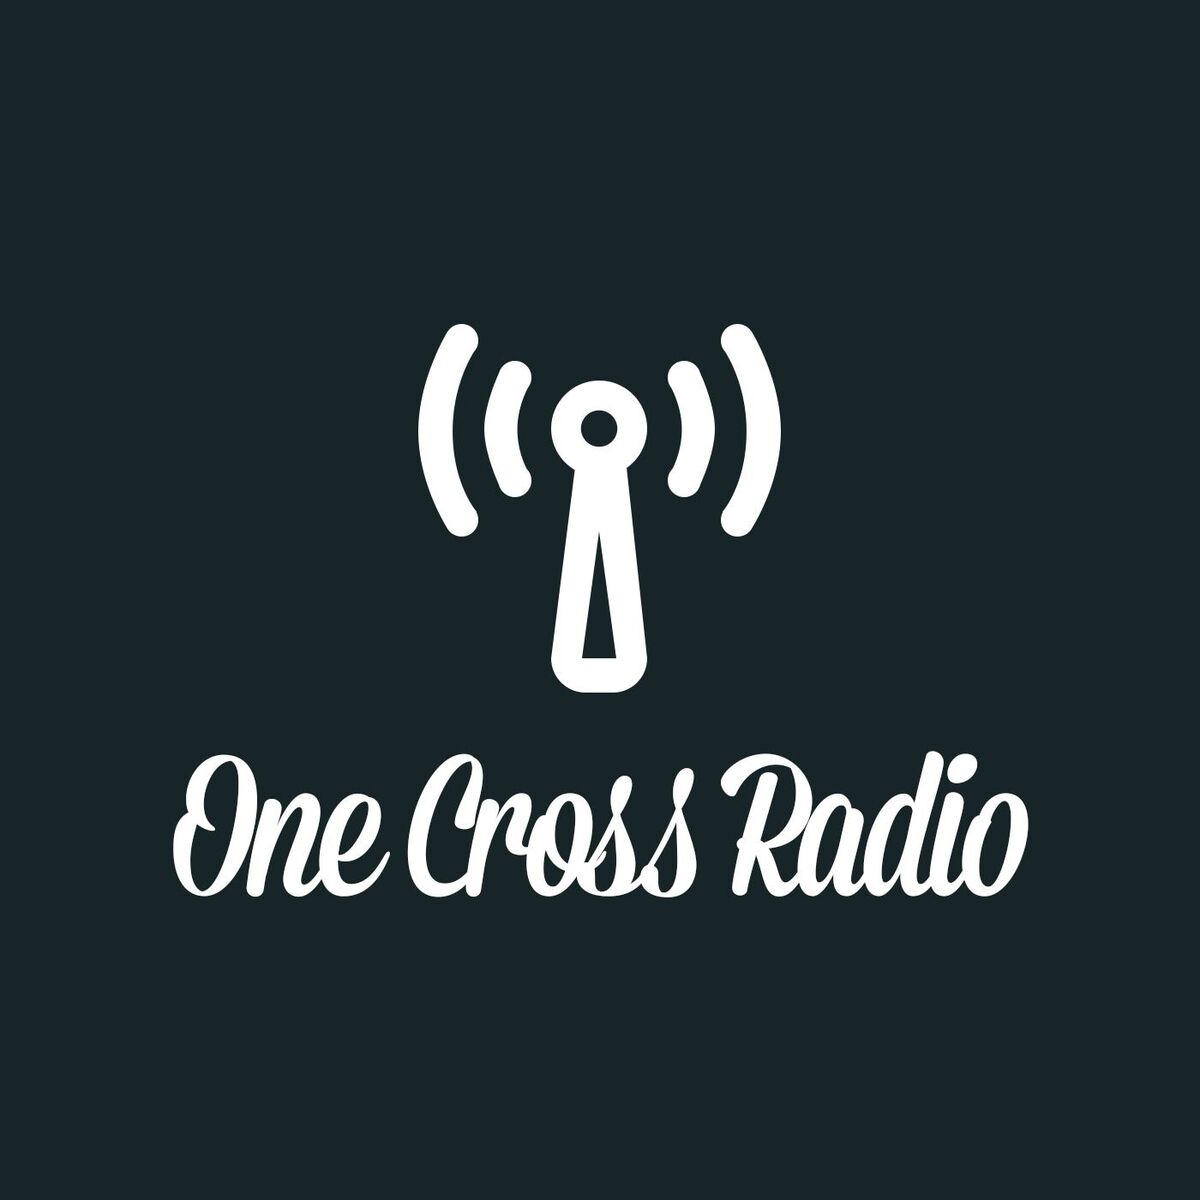 One Cross Radio